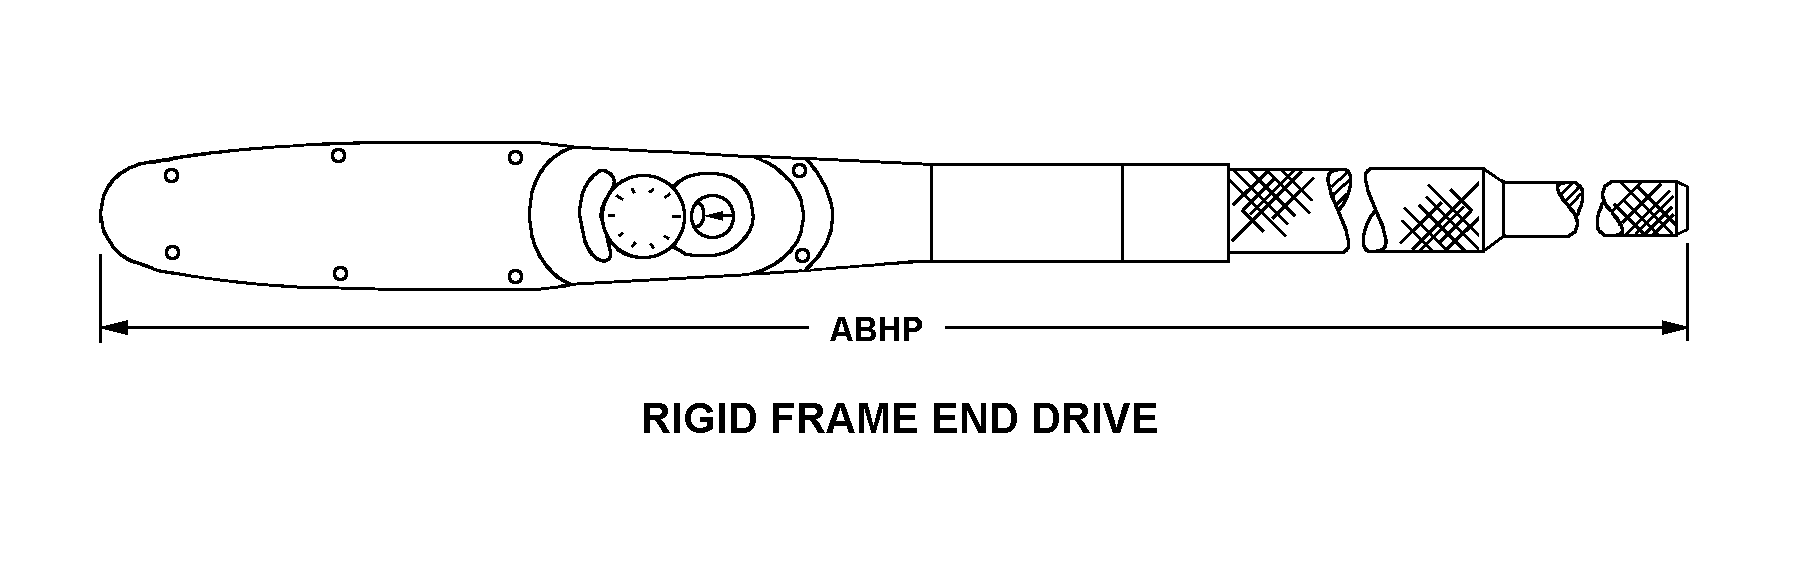 RIGID FRAME END DRIVE style nsn 5120-01-396-5686